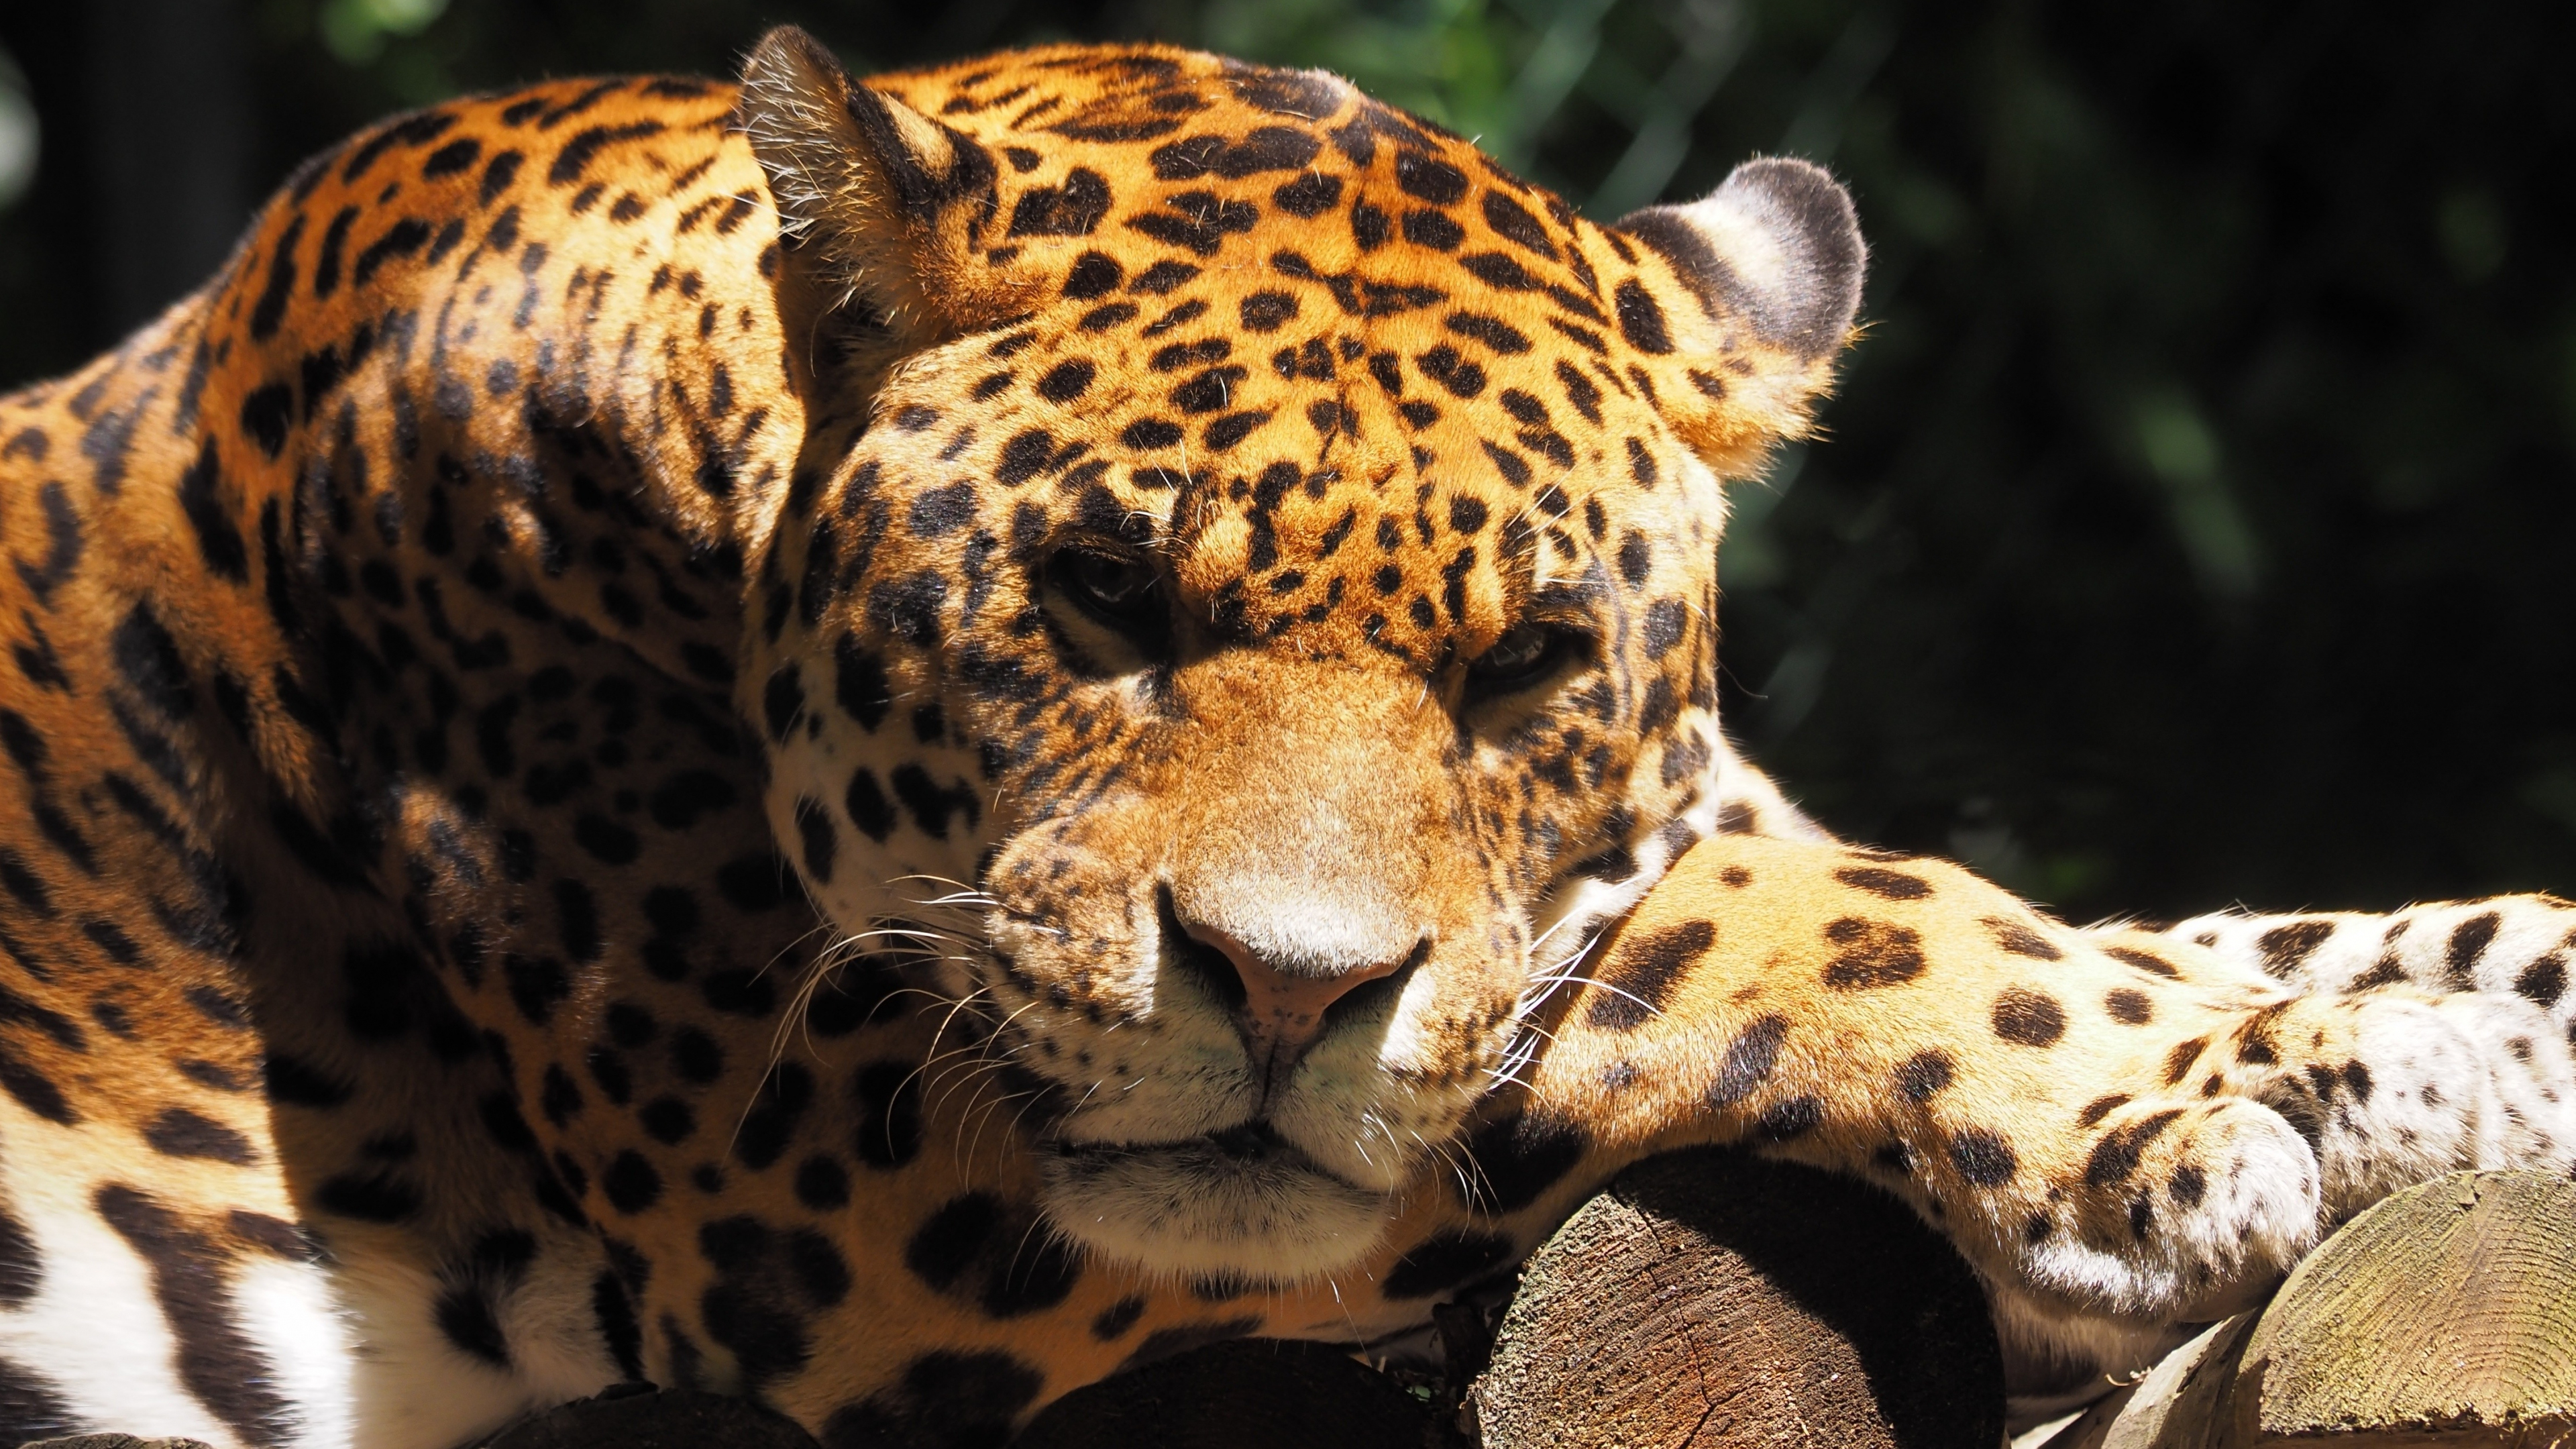 Download wallpaper 3840x2160 jaguar, animal, predator, muzzle, wild 4k  wallpaper, uhd wallpaper, 16:9 widescreen 3840x2160 hd background, 10139